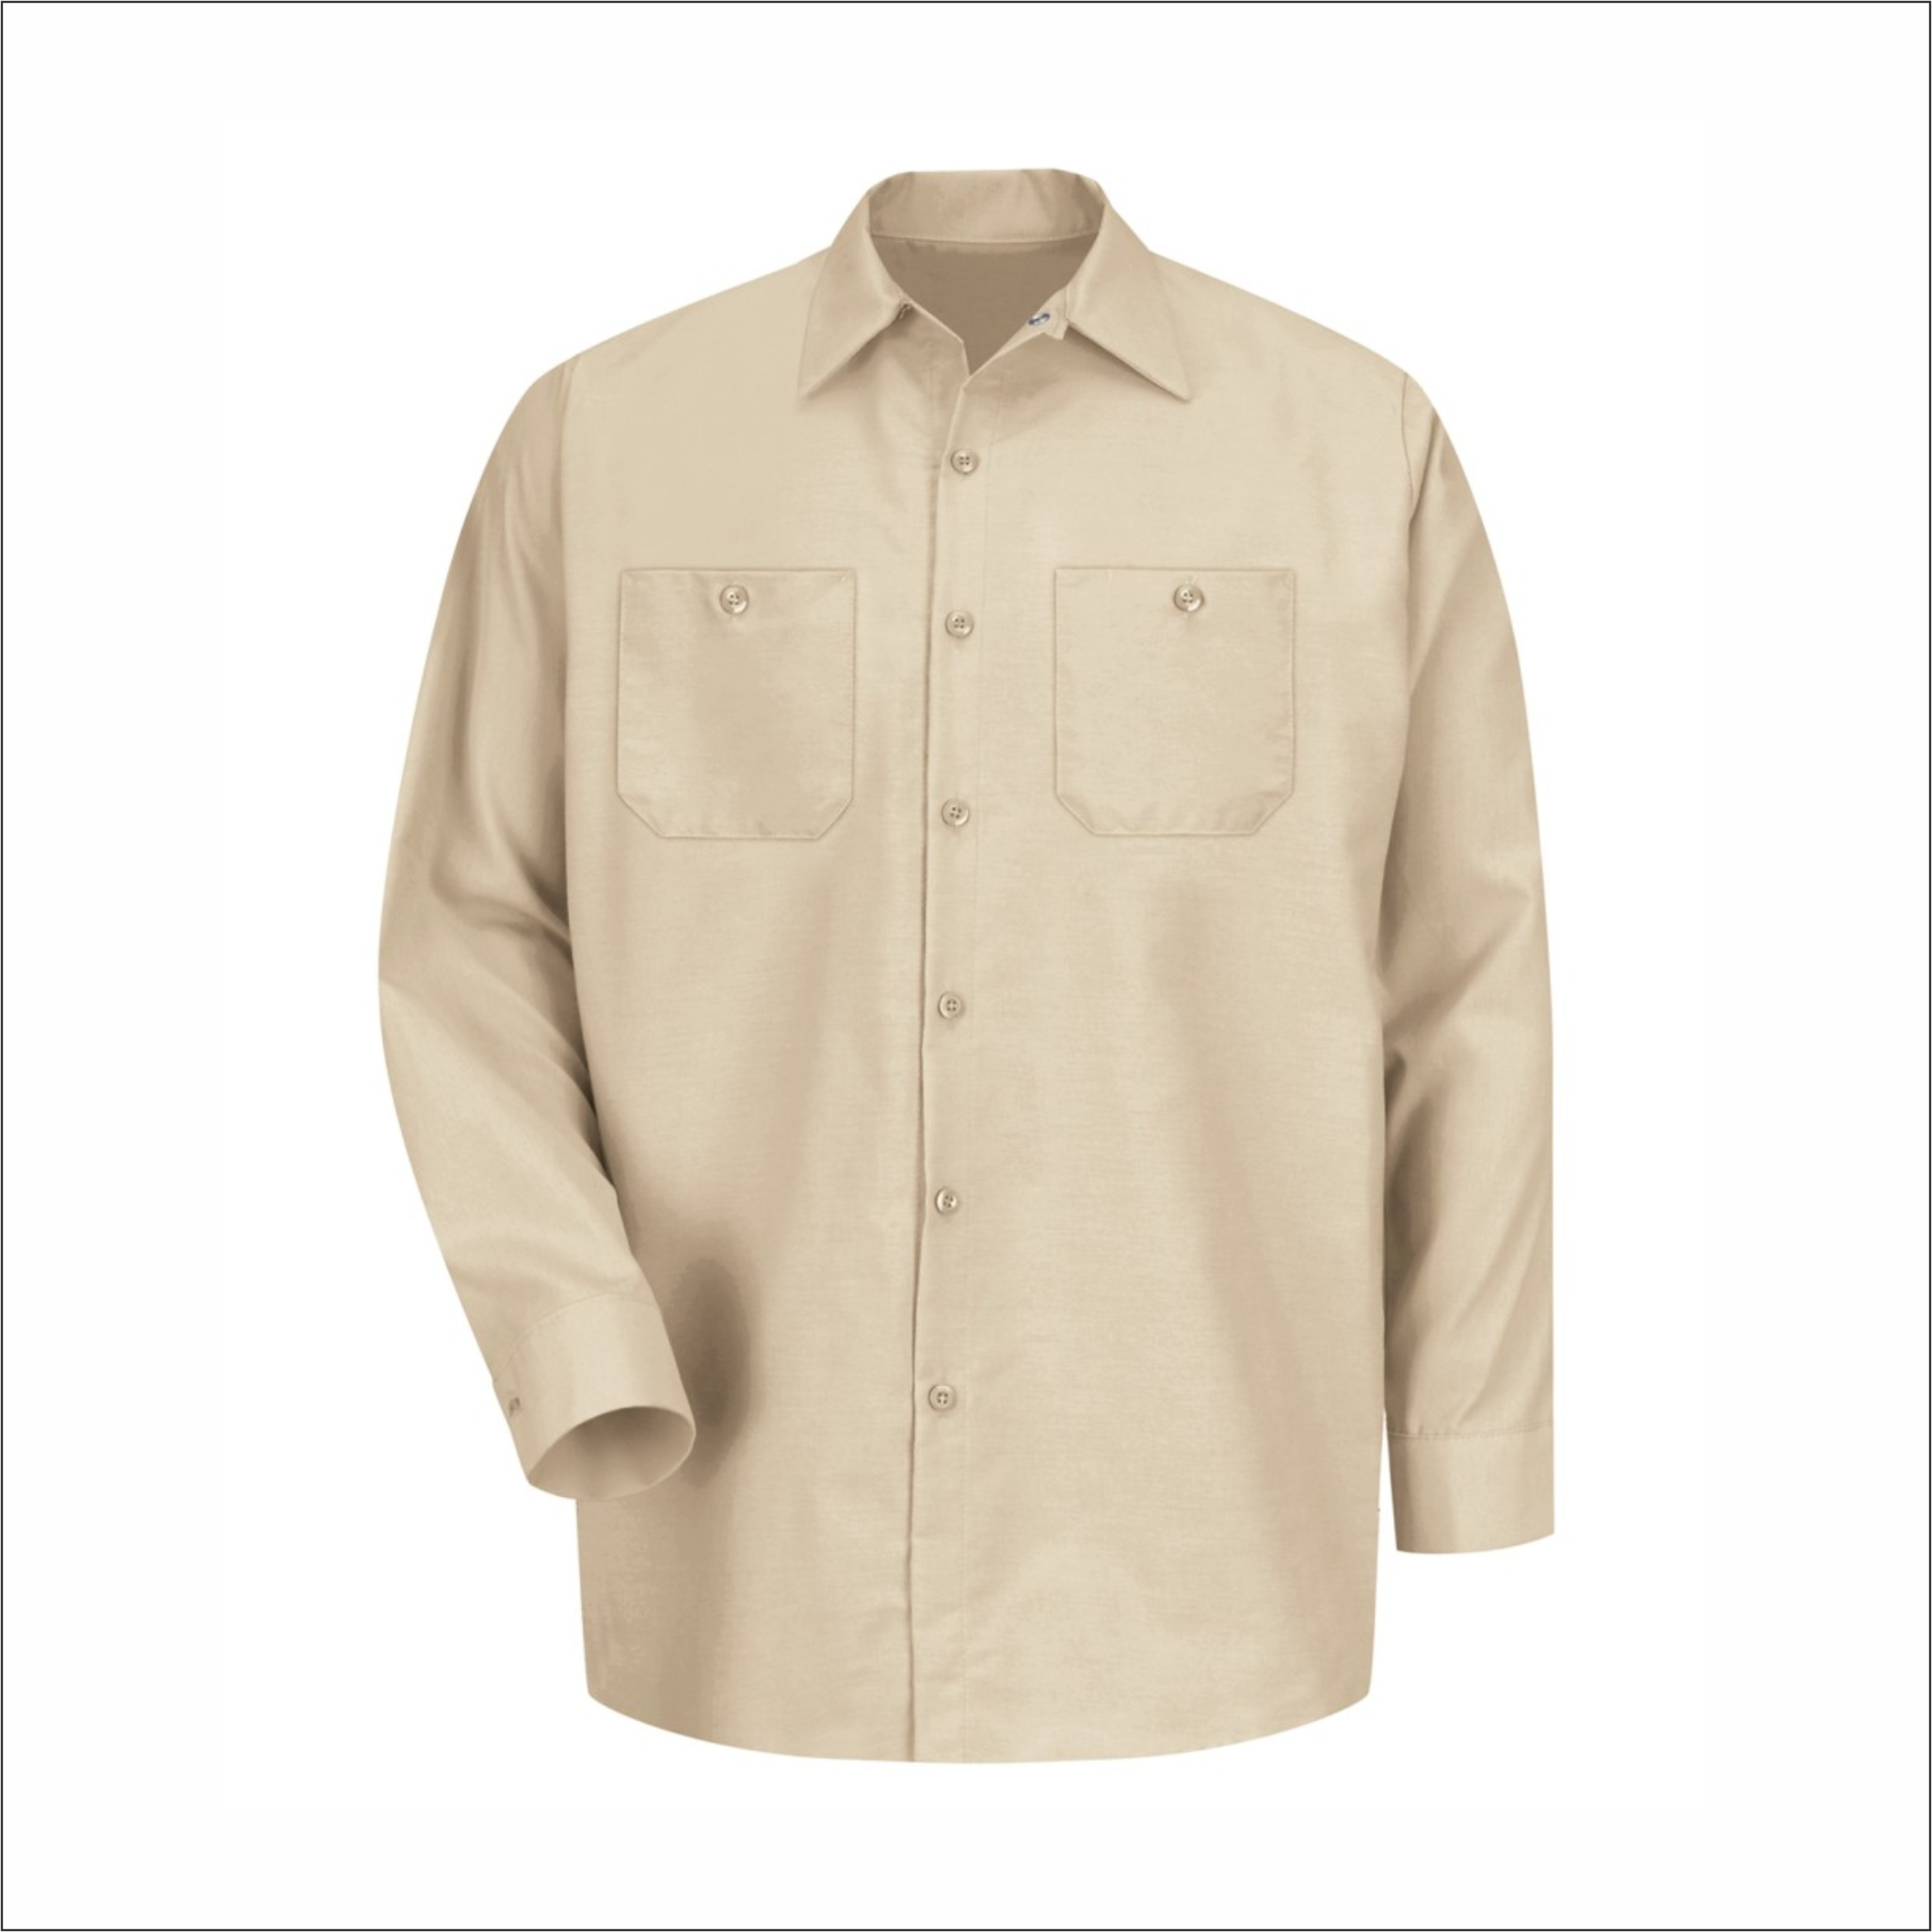 Adult Dress Light Tan Shirt - Long Sleeve - SP14